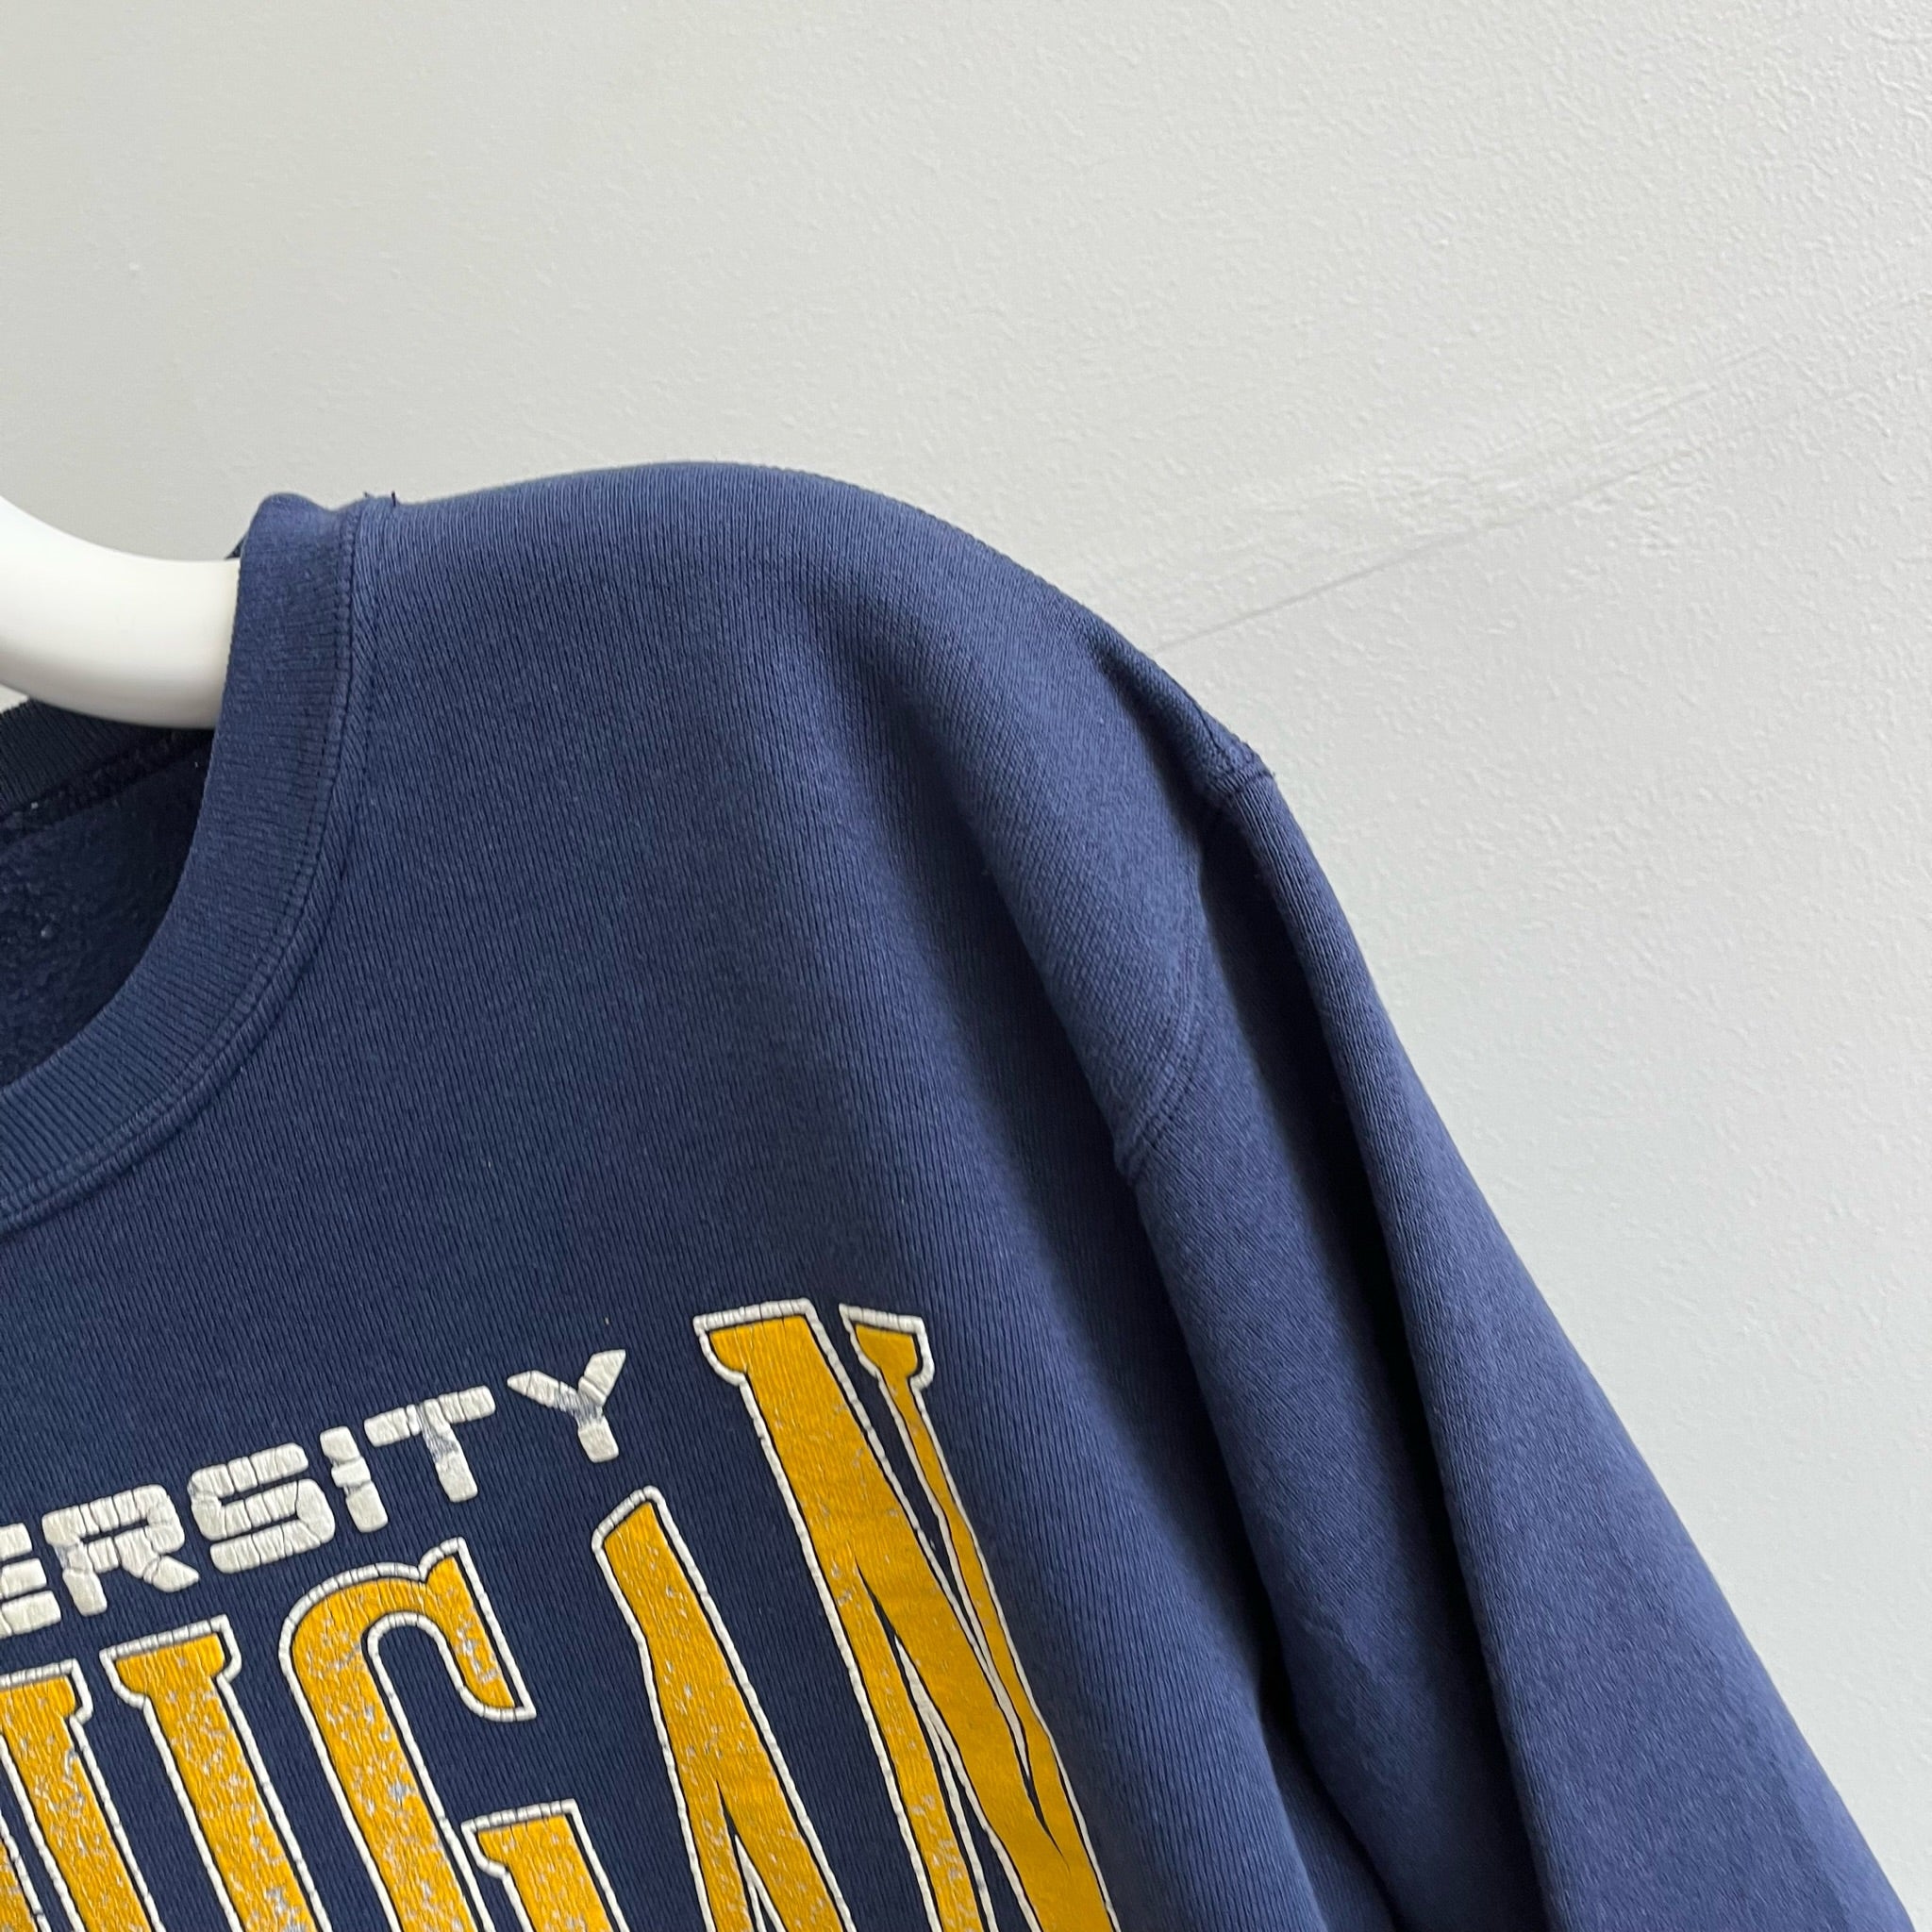 1990s Beat Up University of Michigan Sweatshirt